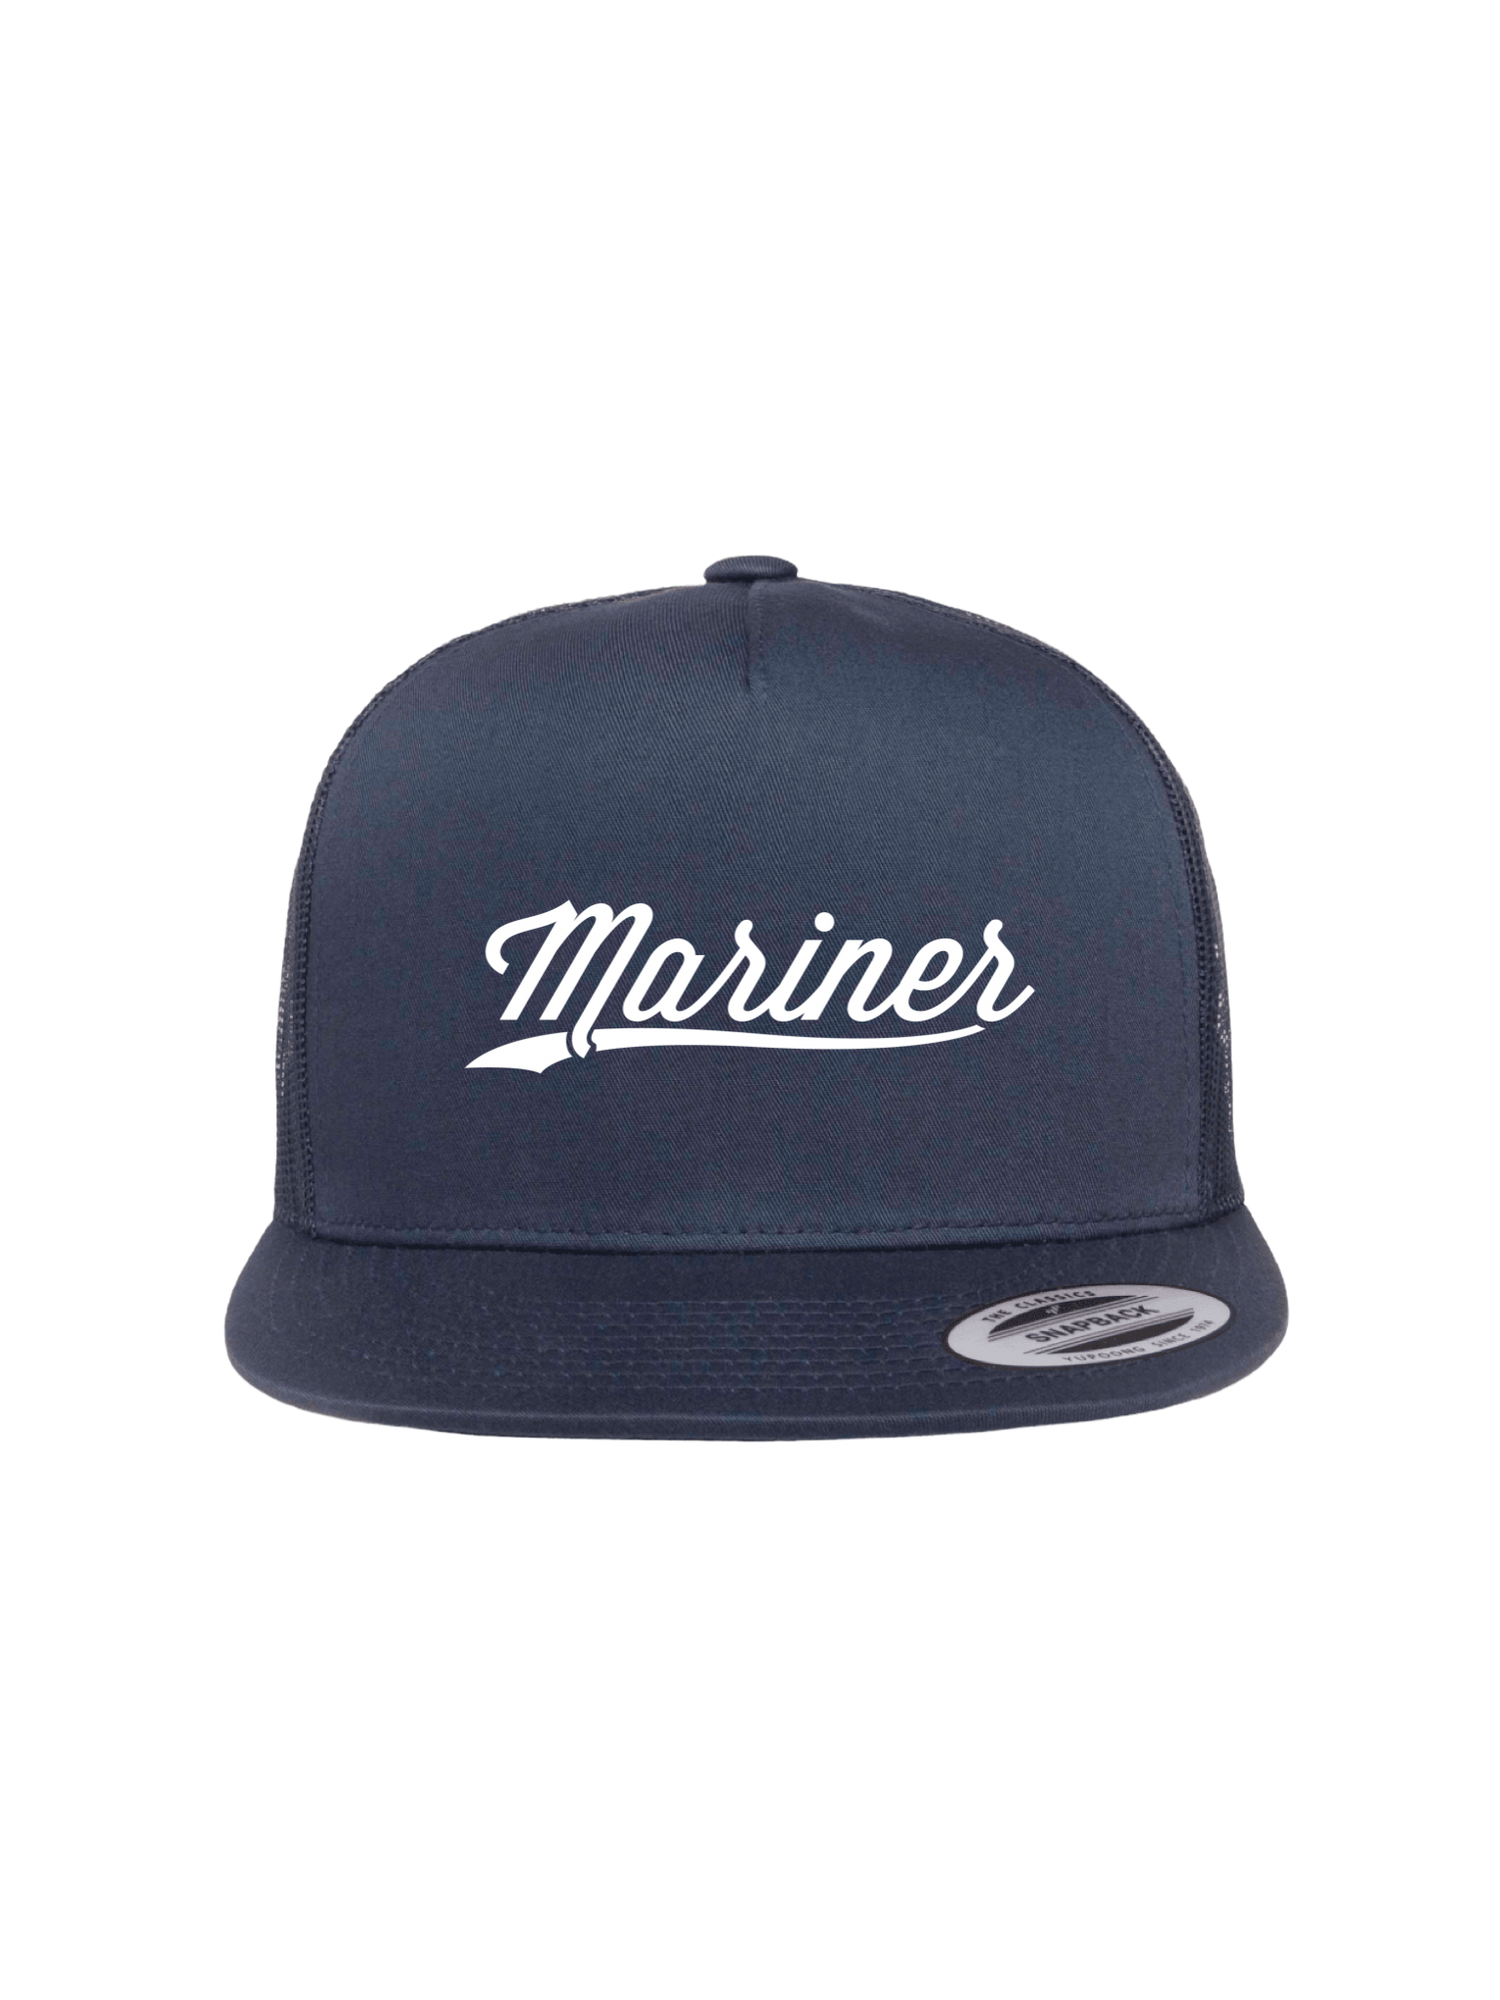 Mariner cap - Seaman&